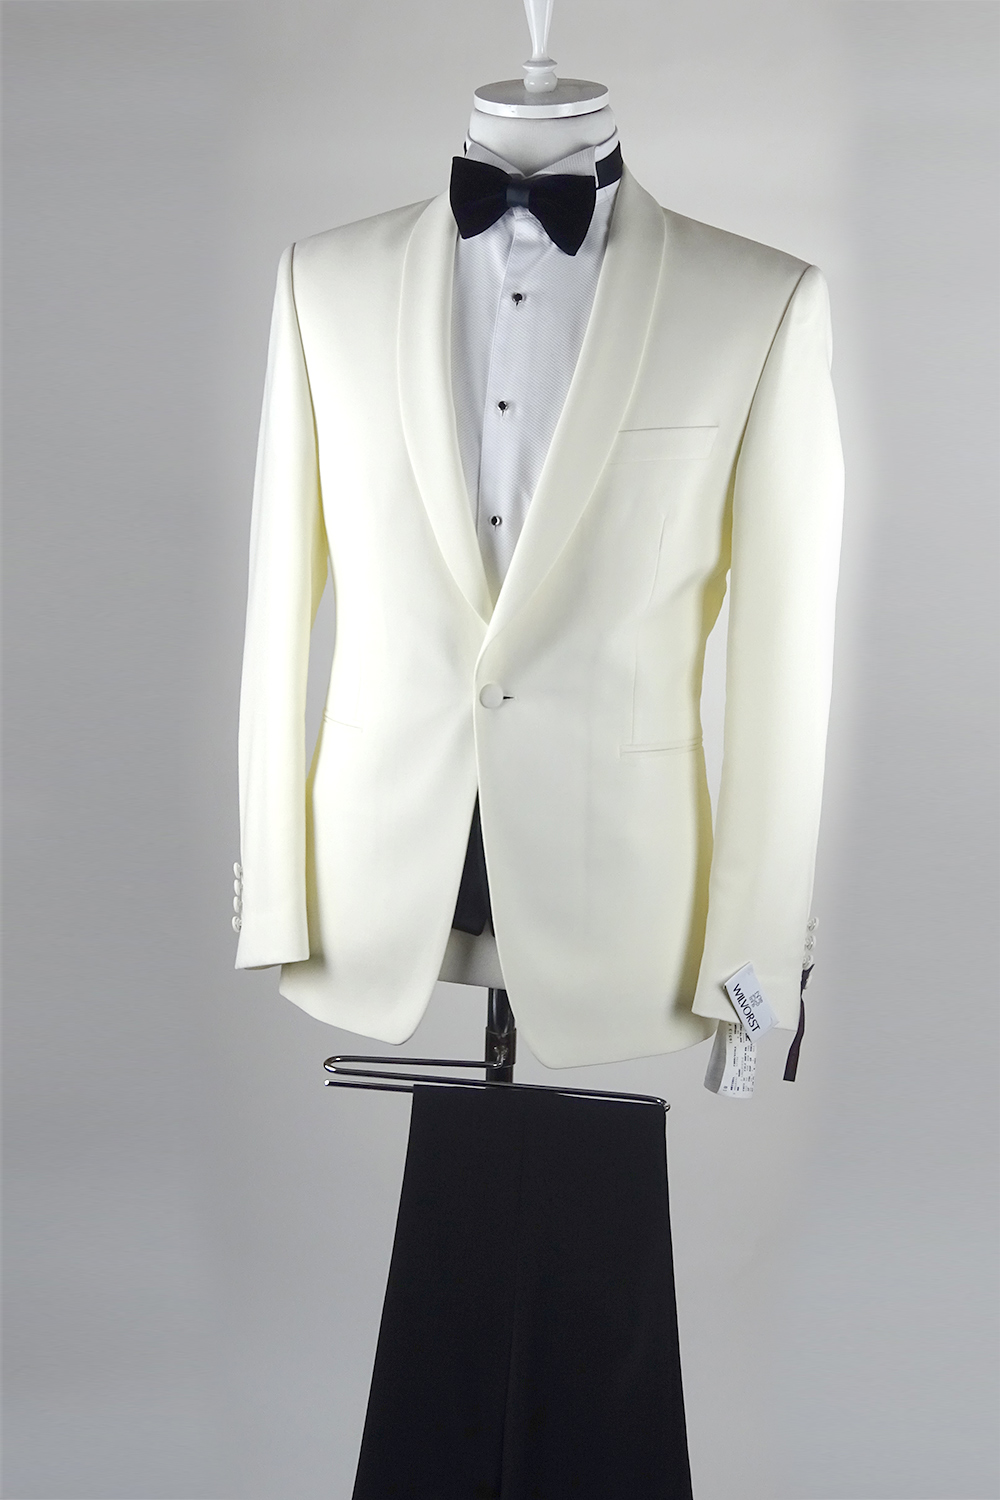 White Wedding Tuxedo Jacket - Tom Murphy's Formal and Menswear